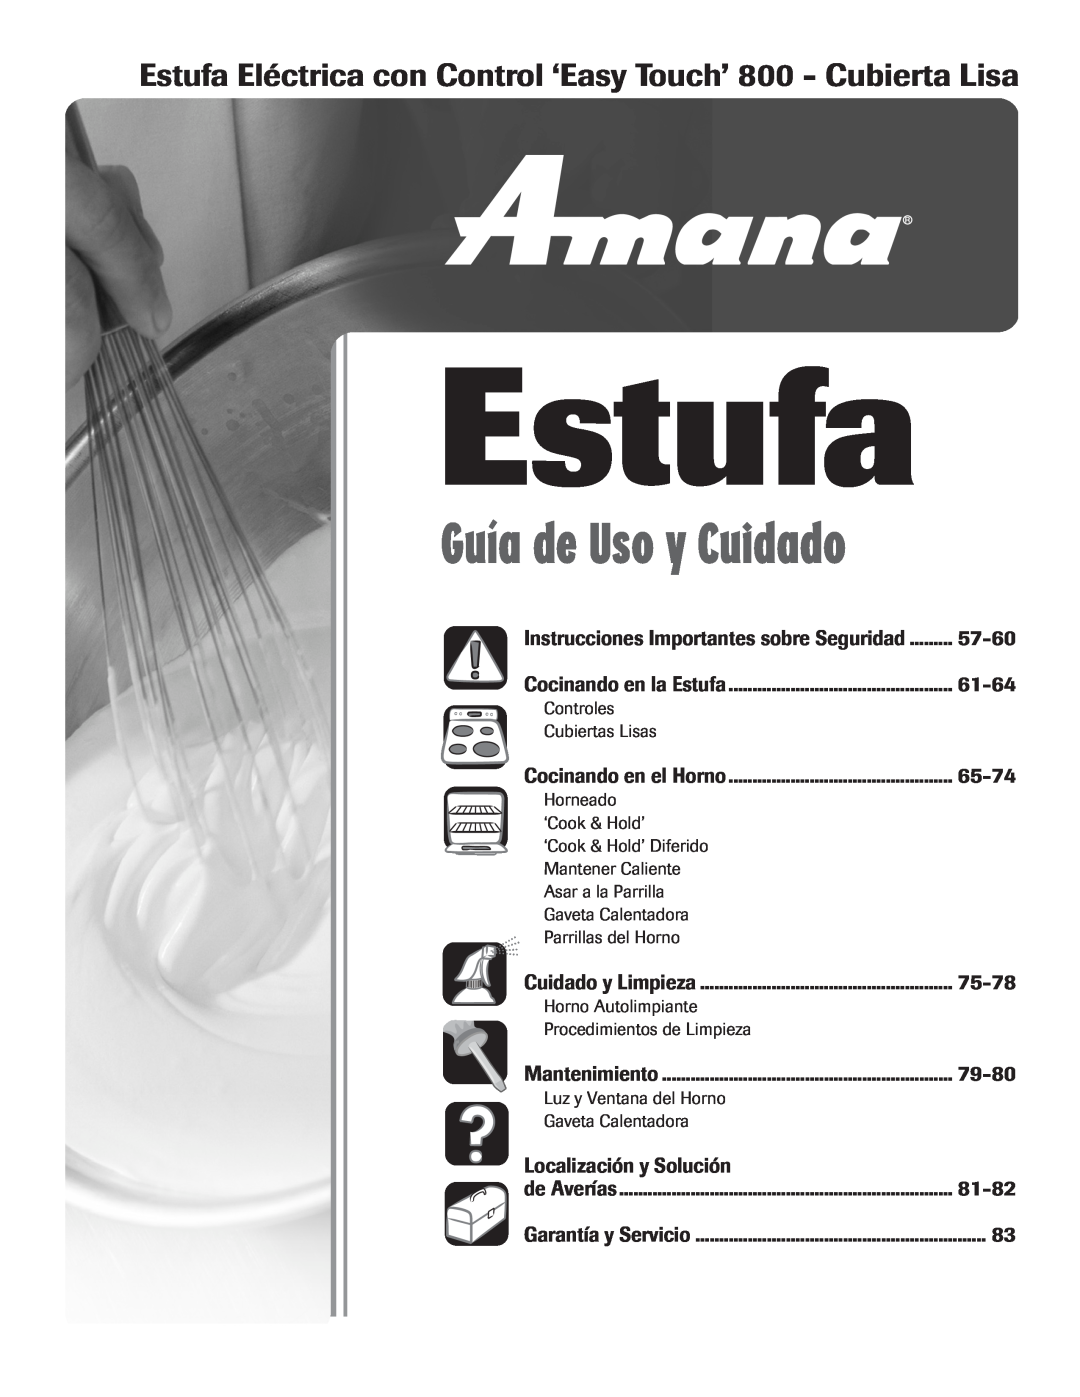 Amana AER5845RAW Estufa Eléctrica con Control ‘Easy Touch’ 800 - Cubierta Lisa, 57-60, 61-64, 65-74, 75-78, 79-80 